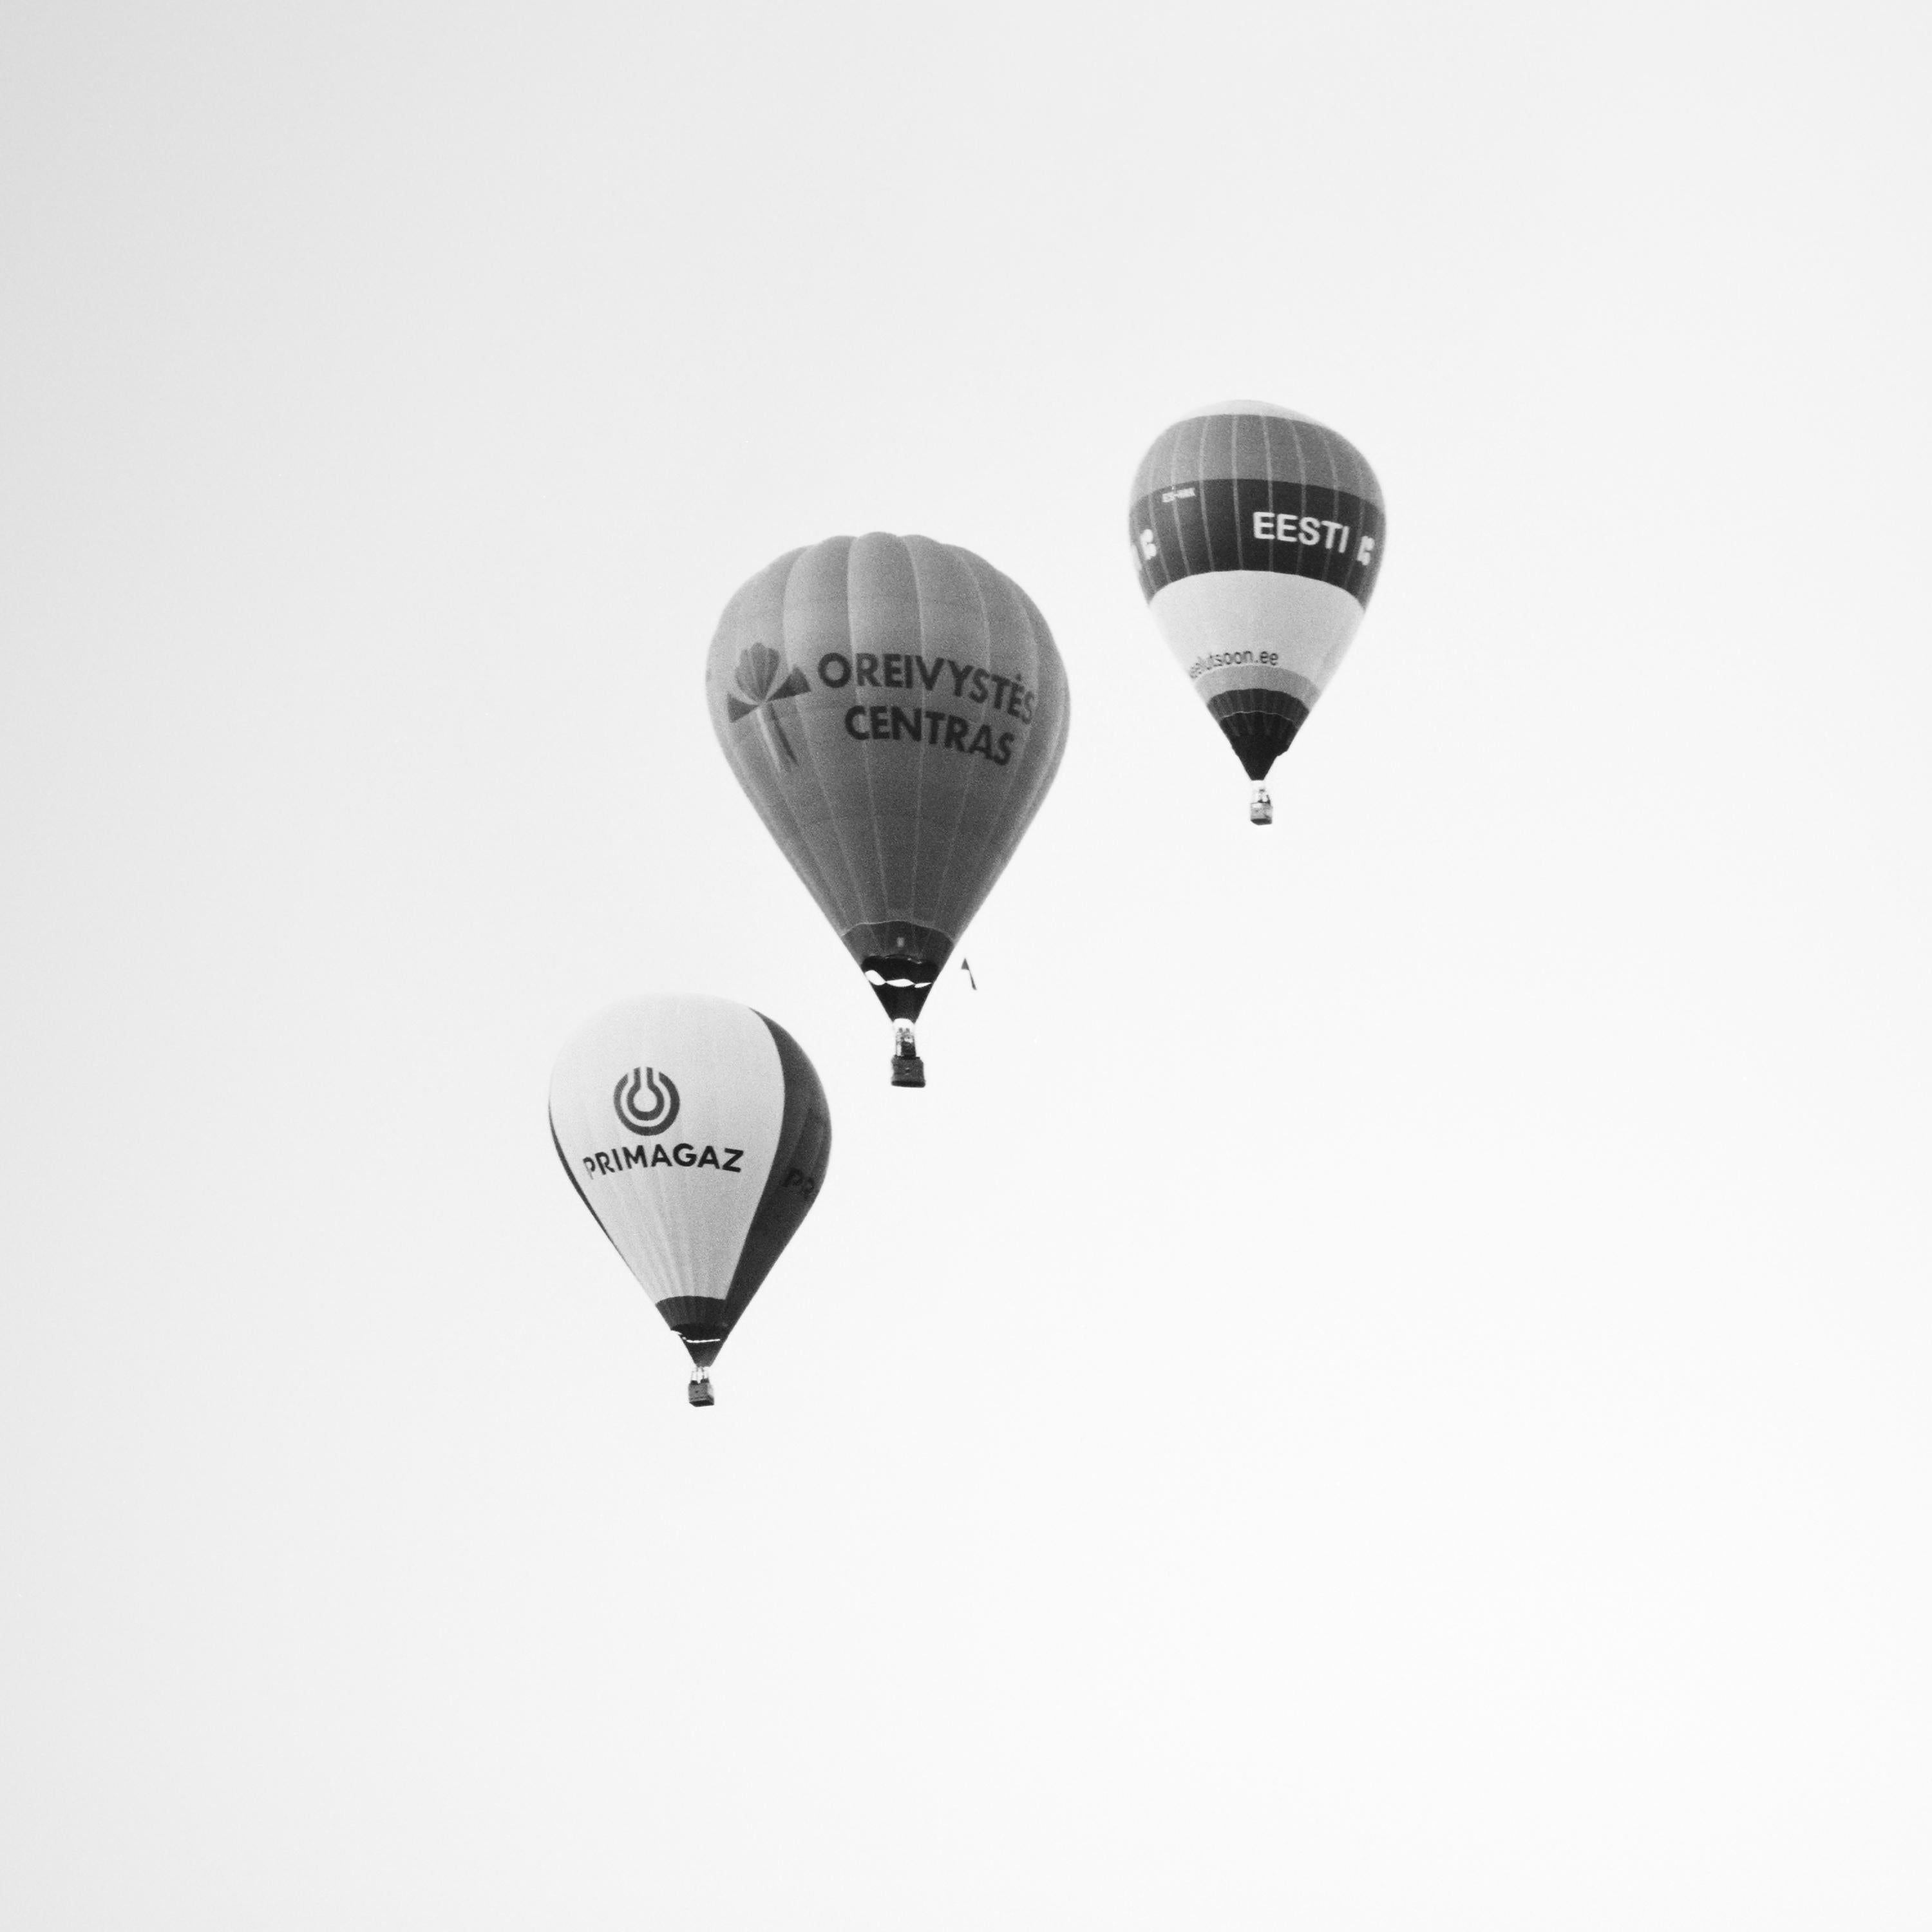 Hot Air Balloon, Cornfield, Championship, Austria, Black White landscape Photo For Sale 4